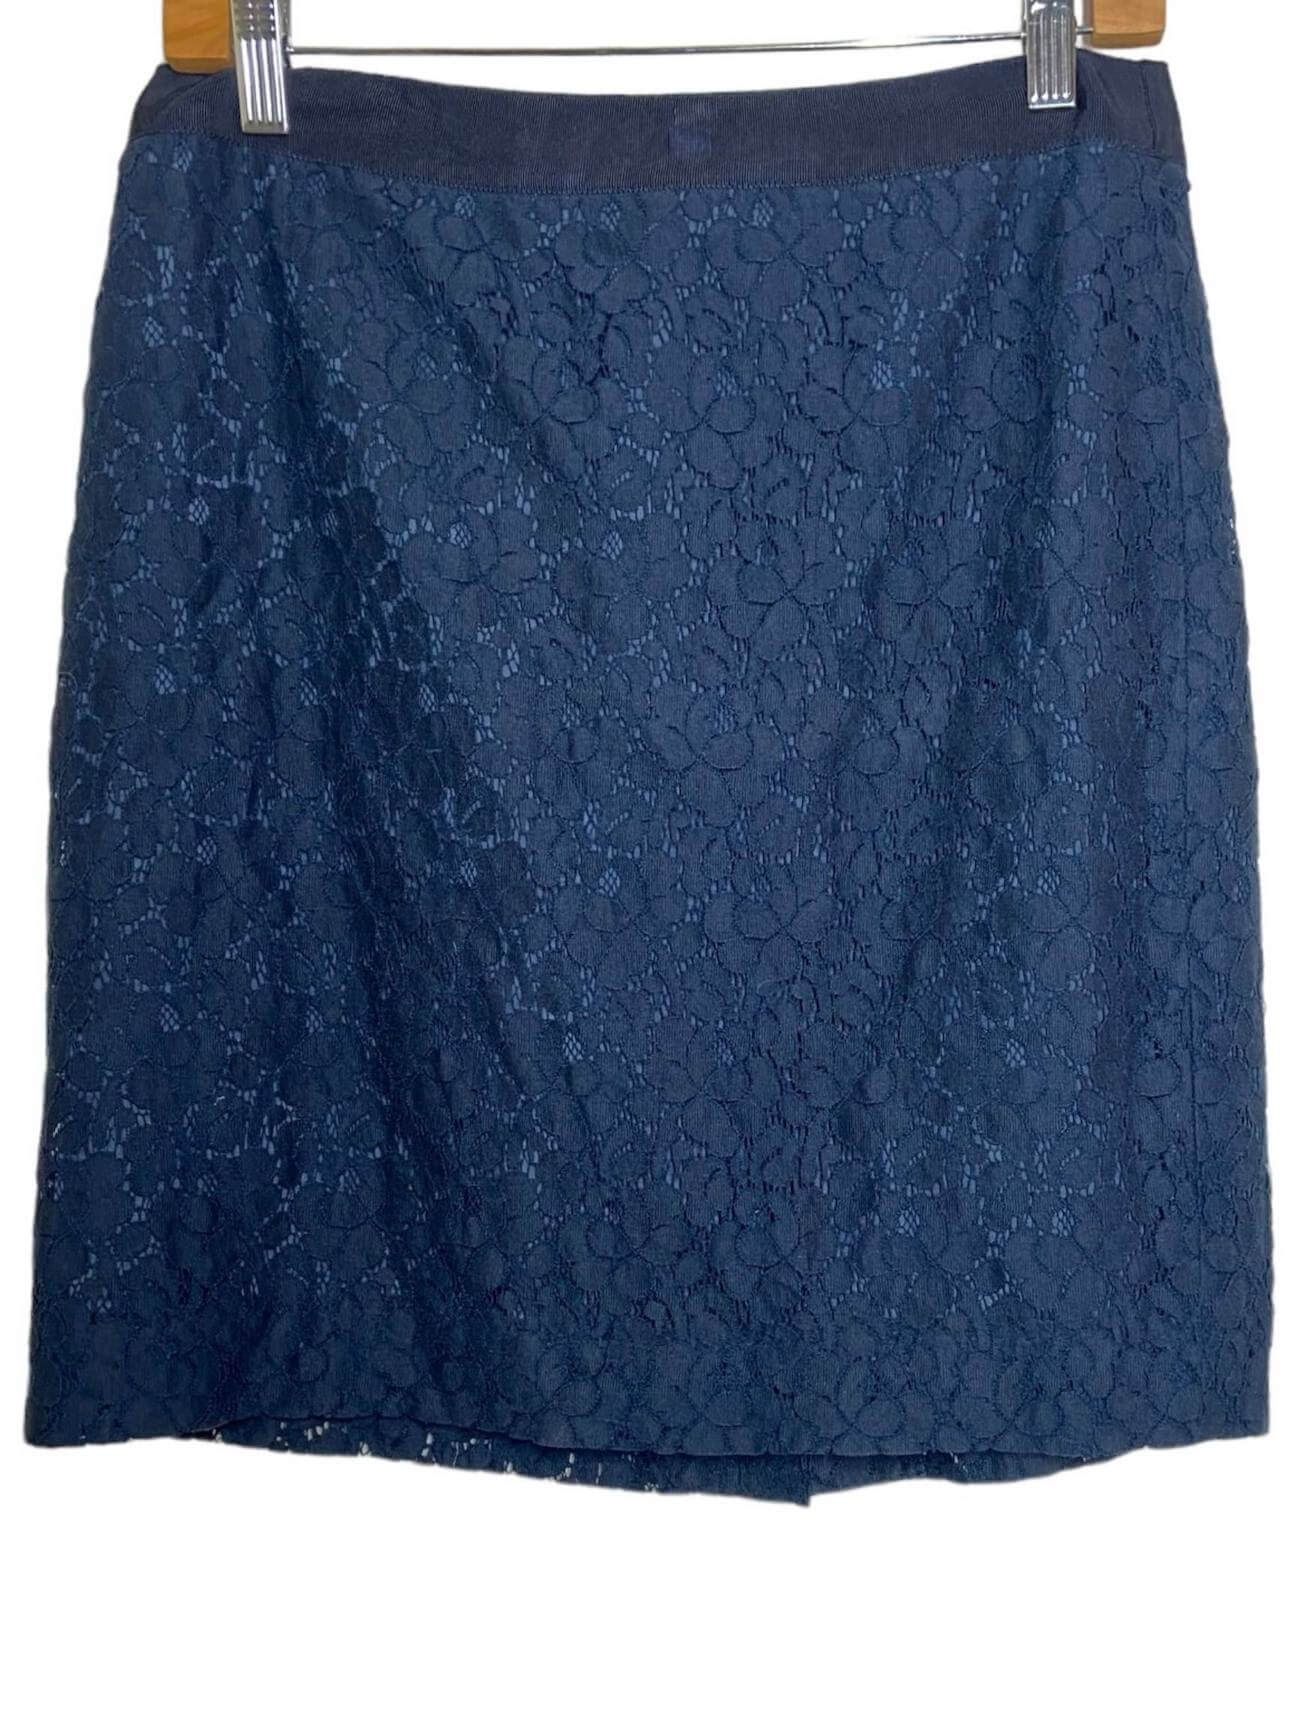 Dark Winter J.CREW navy lace pencil skirt